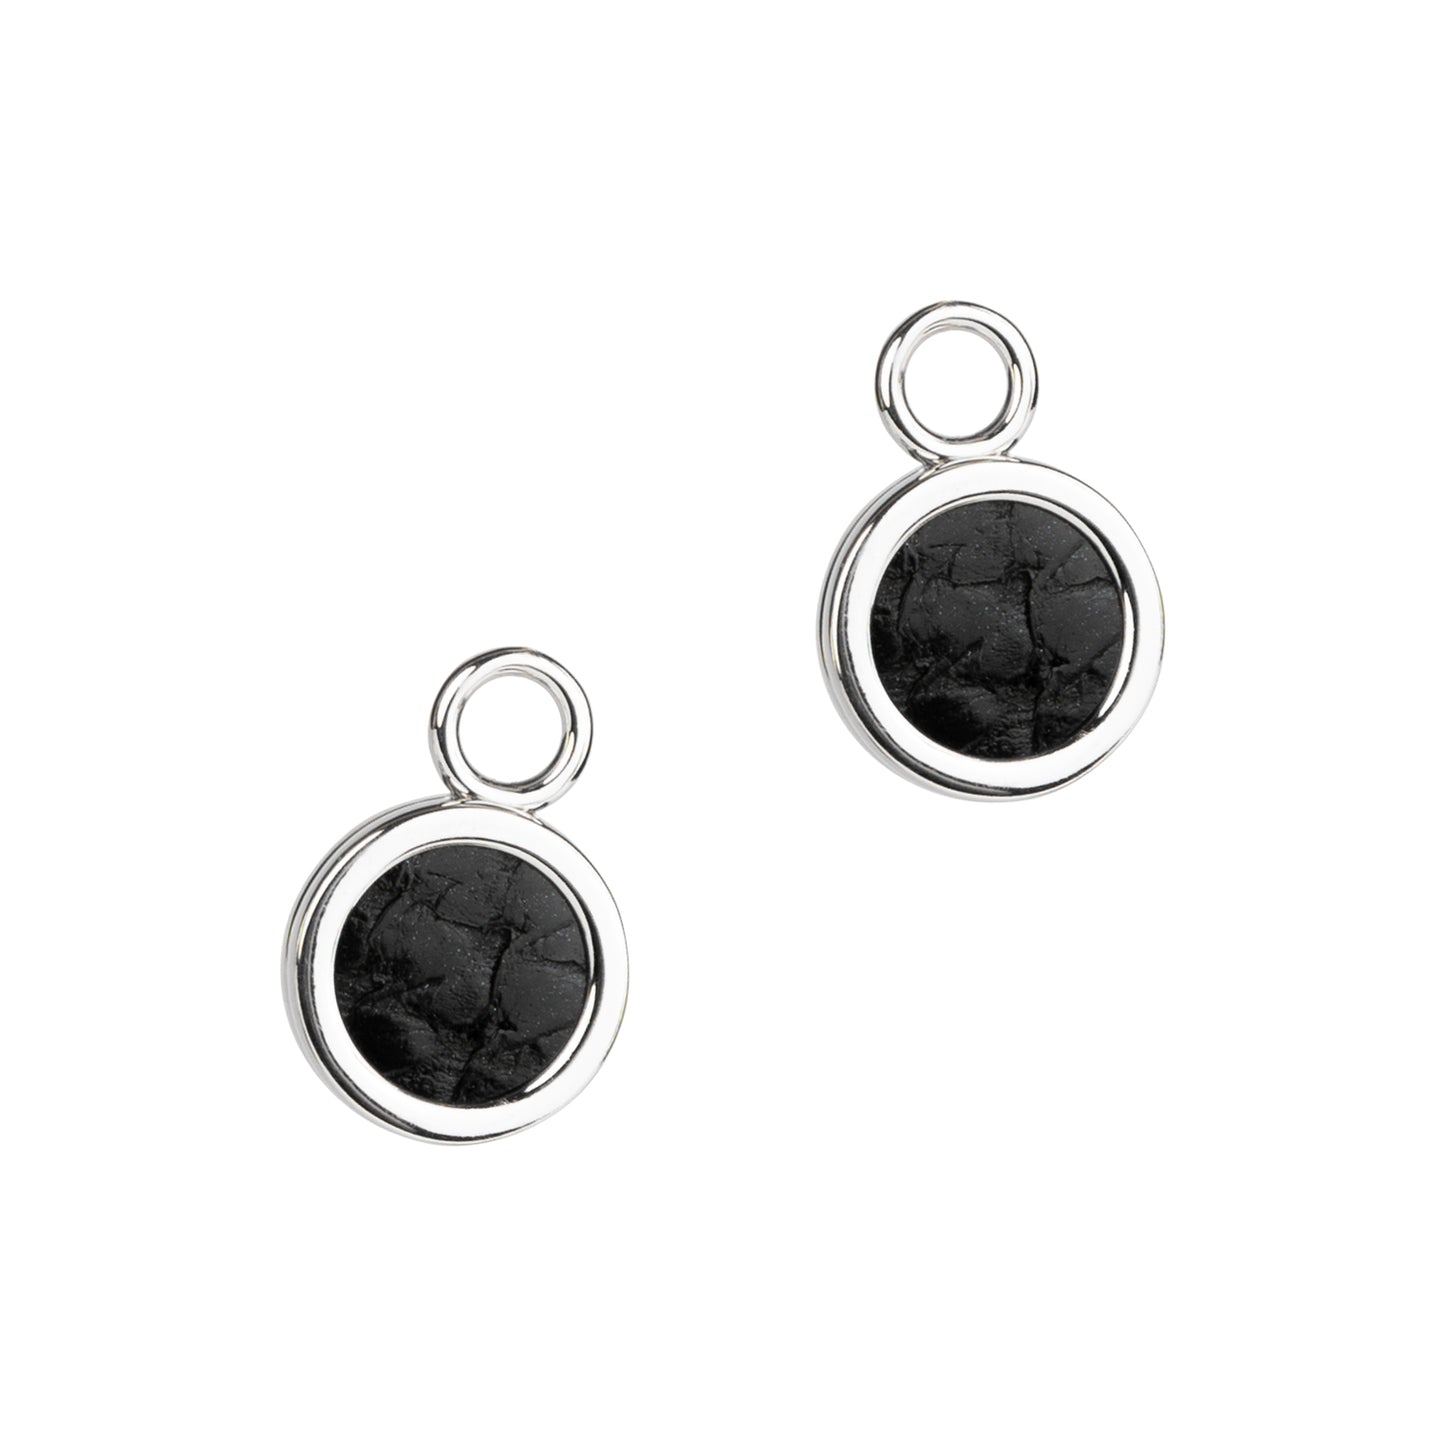 Sisters Earrings silver black pendants